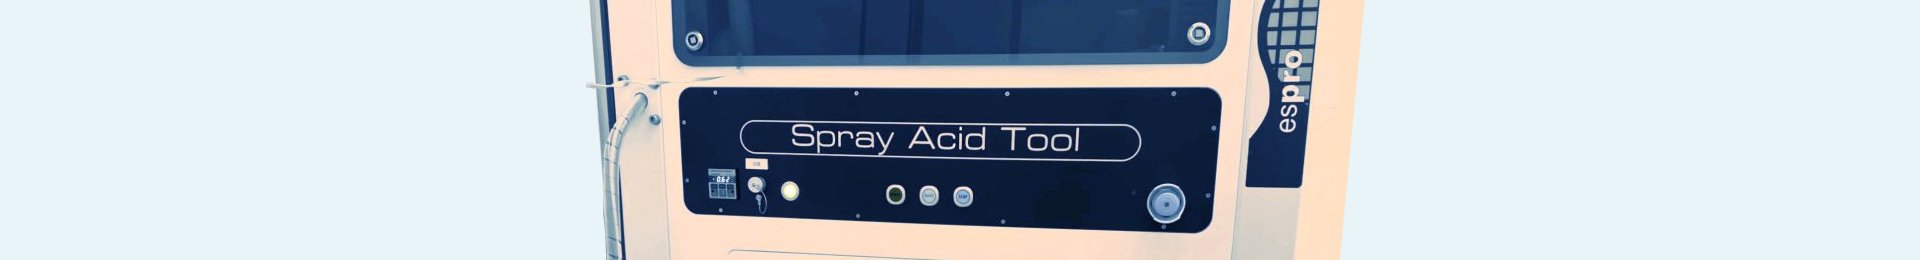 148-spray-acid-tool